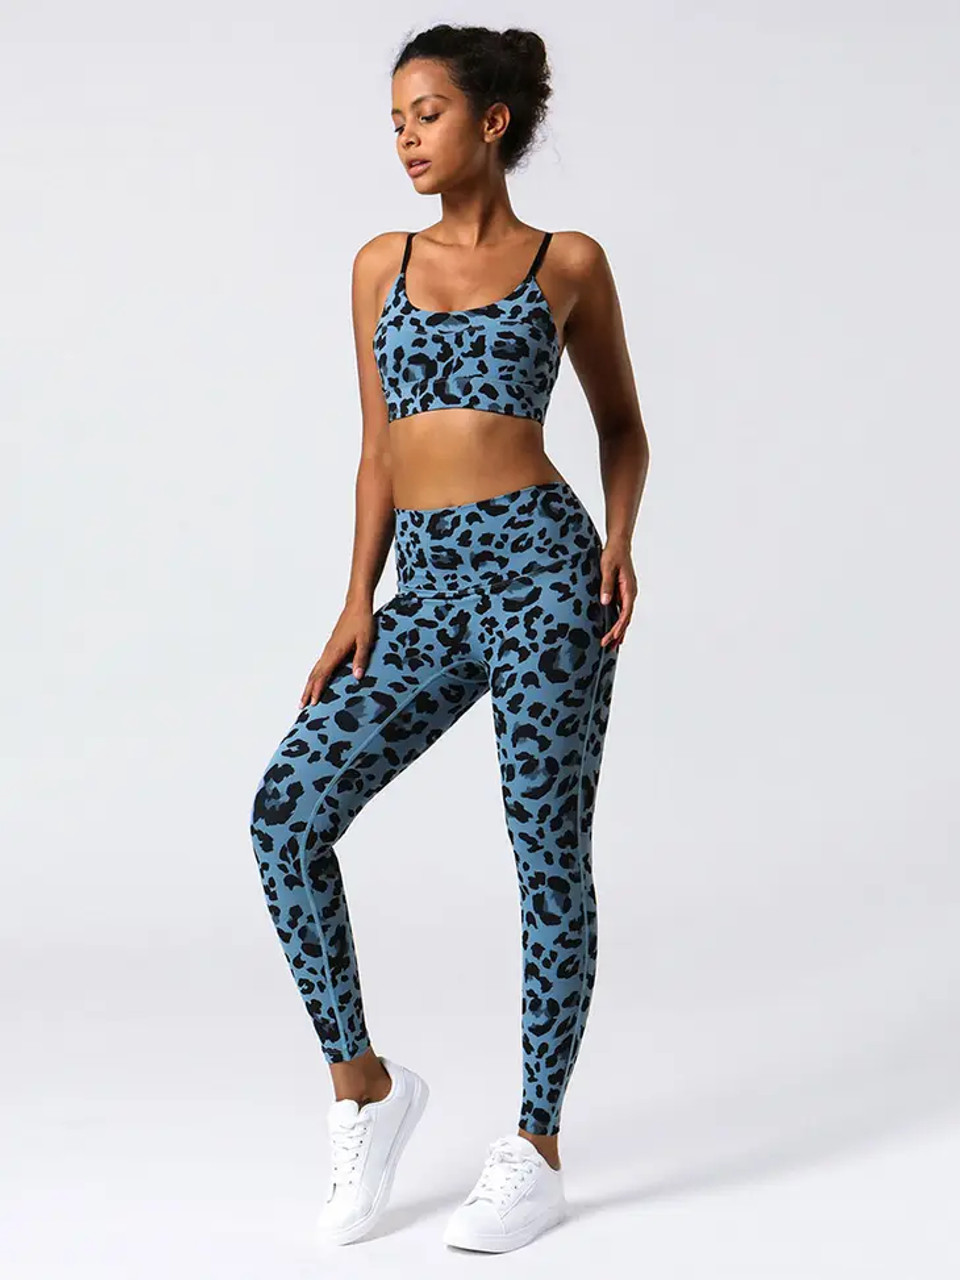 Infinity Legging, Blue Leopard - OhmFit Activewear